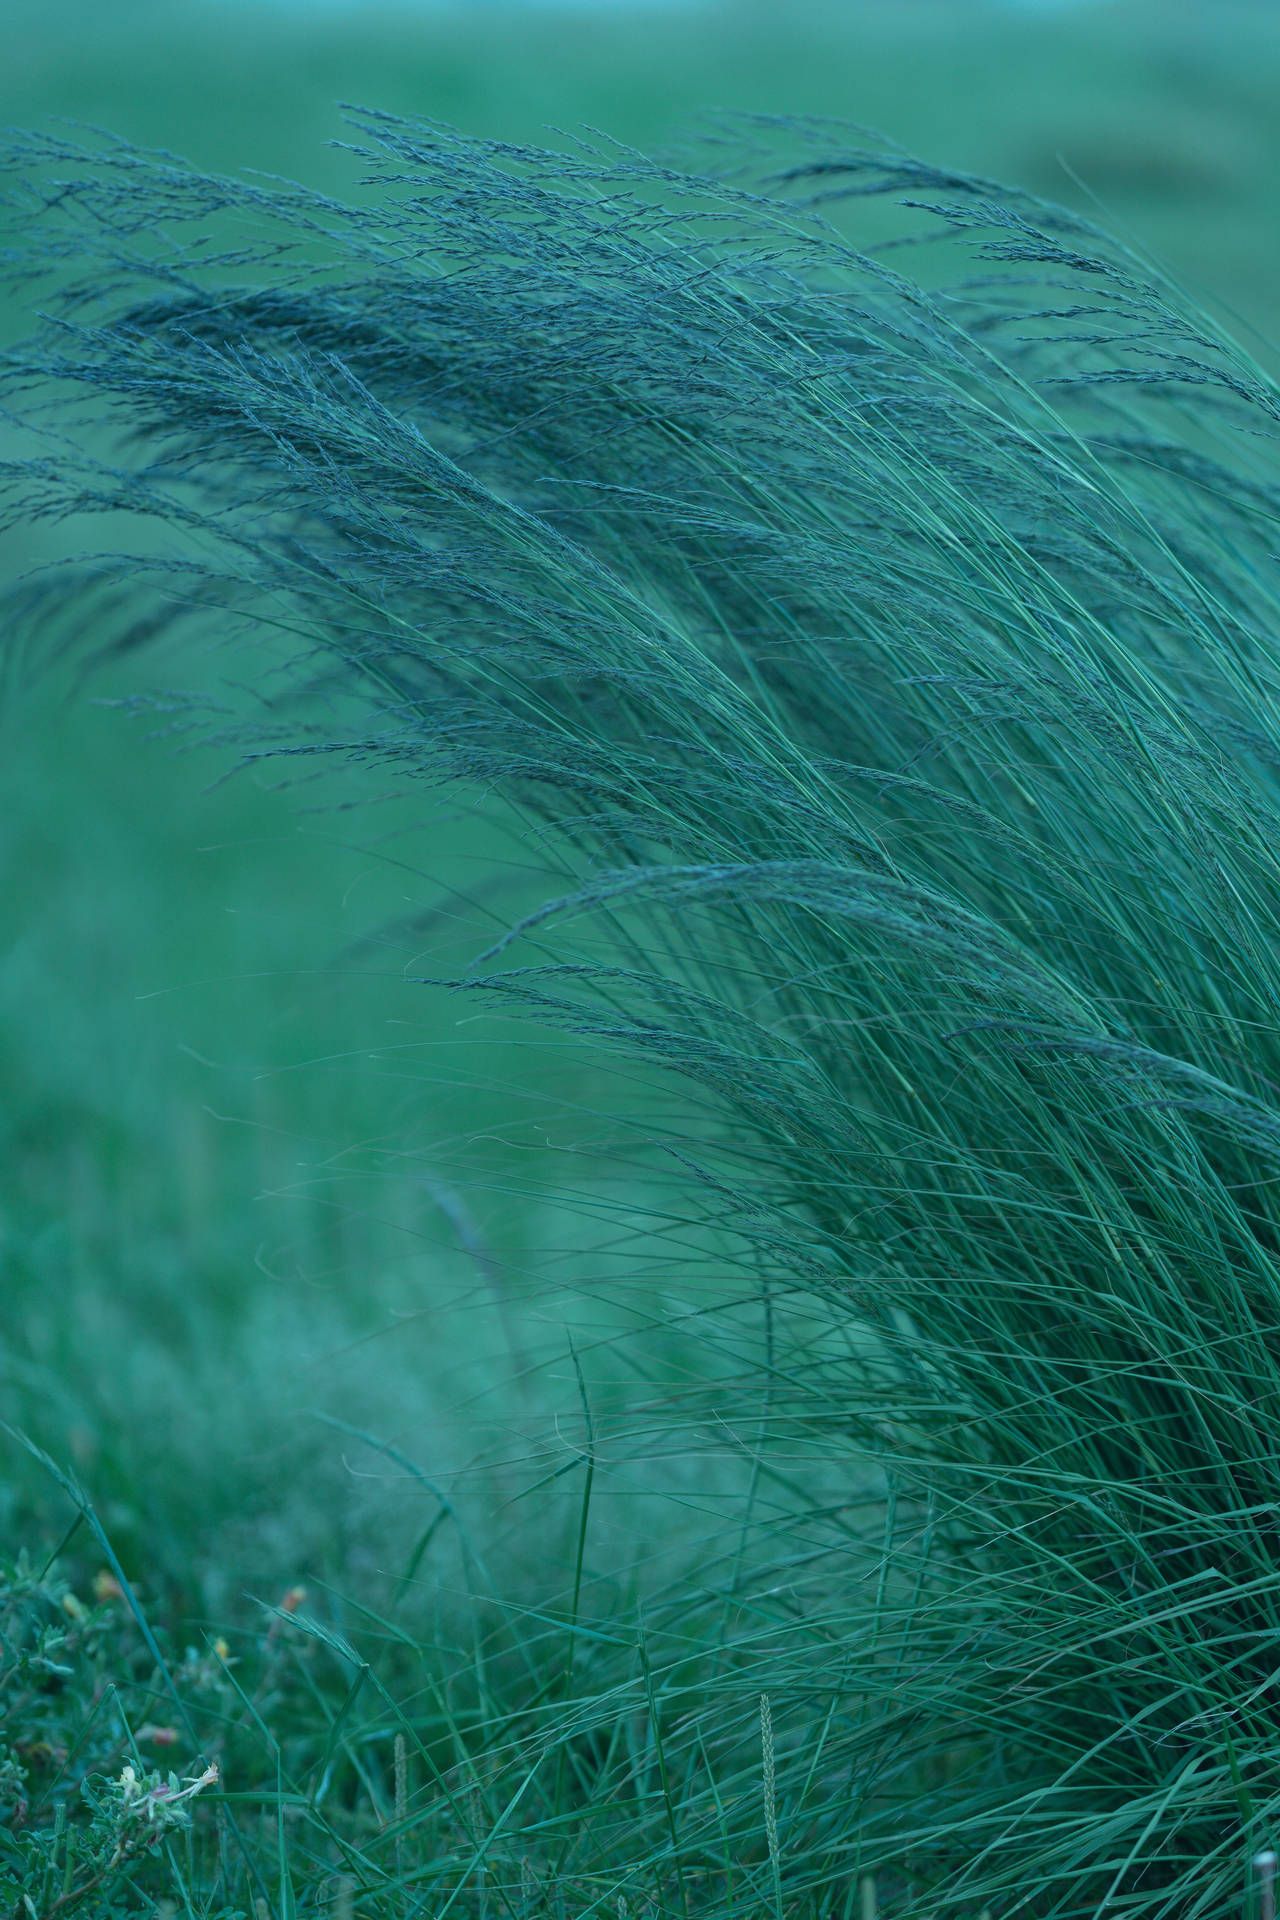 A close up of tall grass in a field. - Dark green